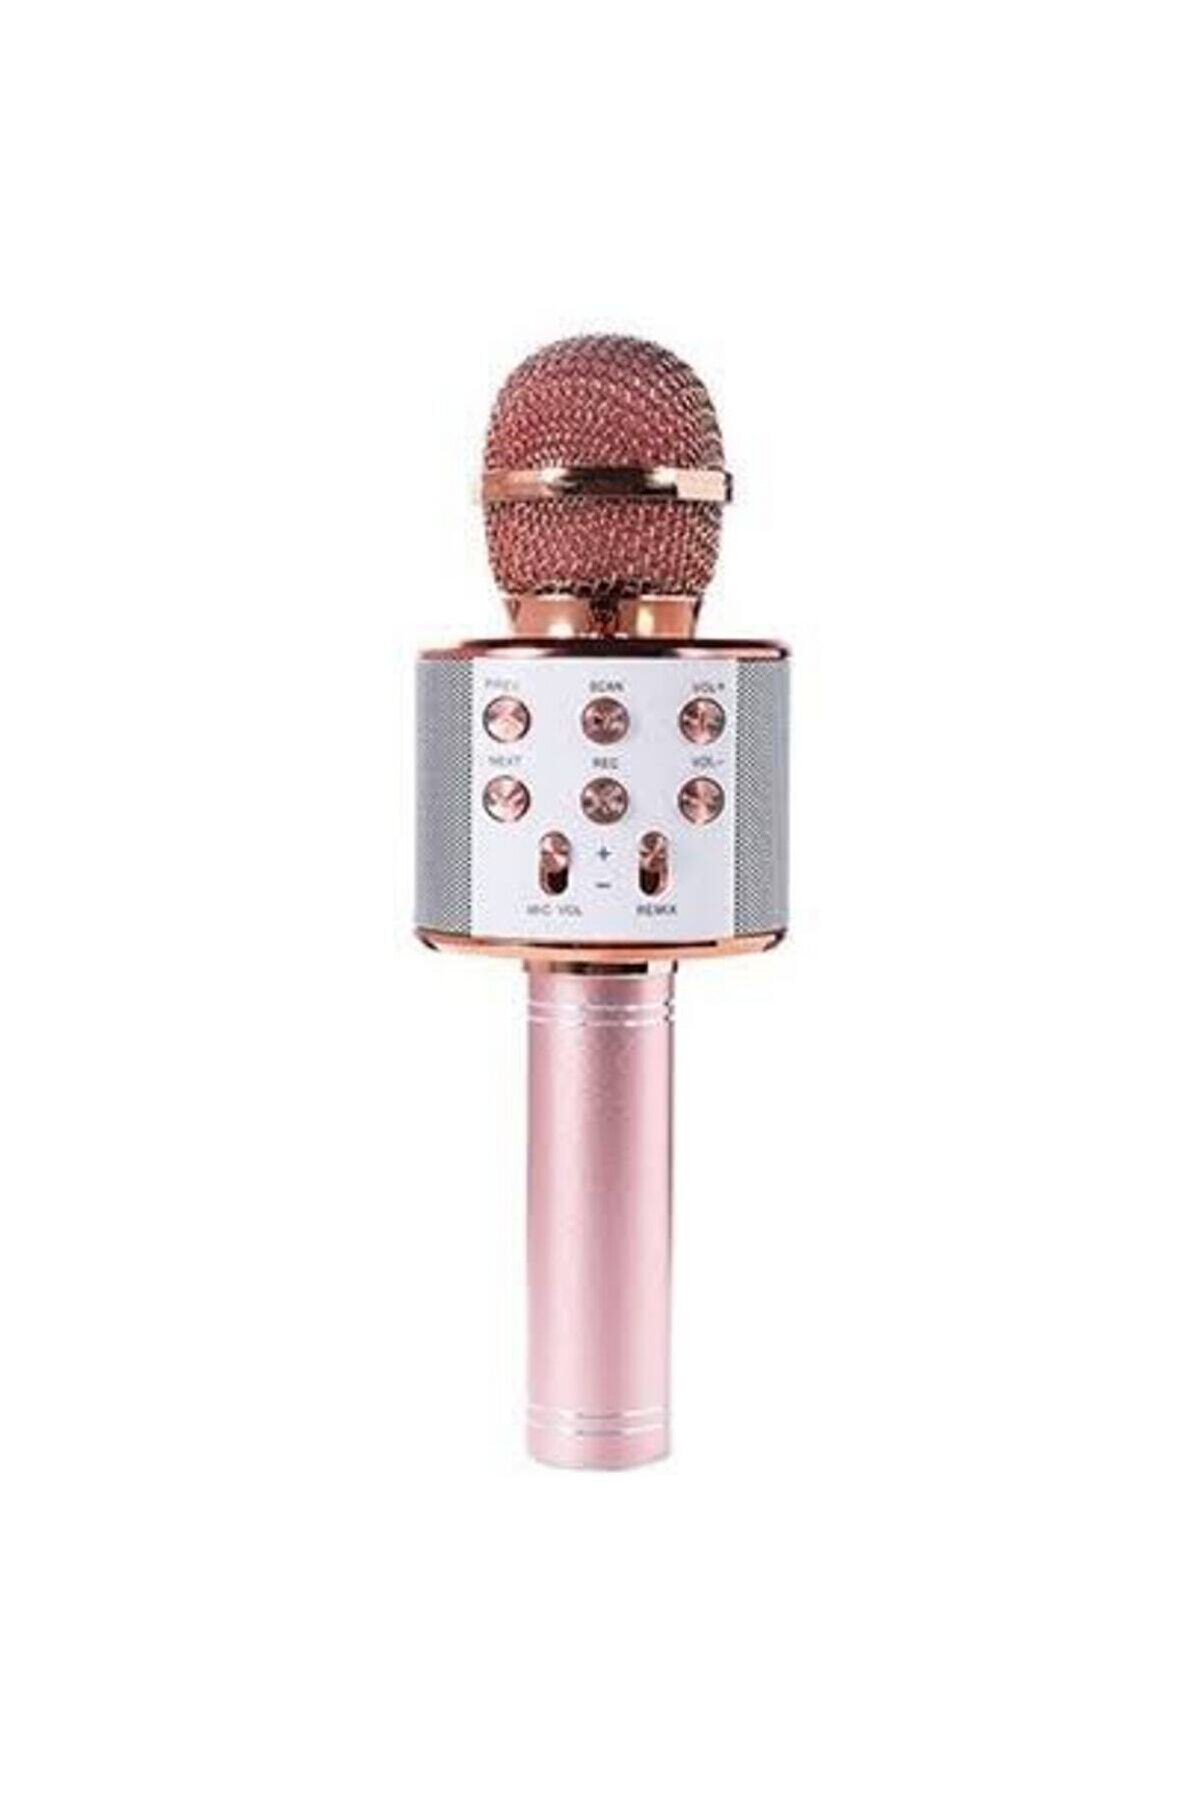 Evervox Evr Krk 02 Ilkdağ Karaoke Mikrofon Aux Usb Ve Sd Kart Girişli Bluetooth Rose Gold Ilkdağ